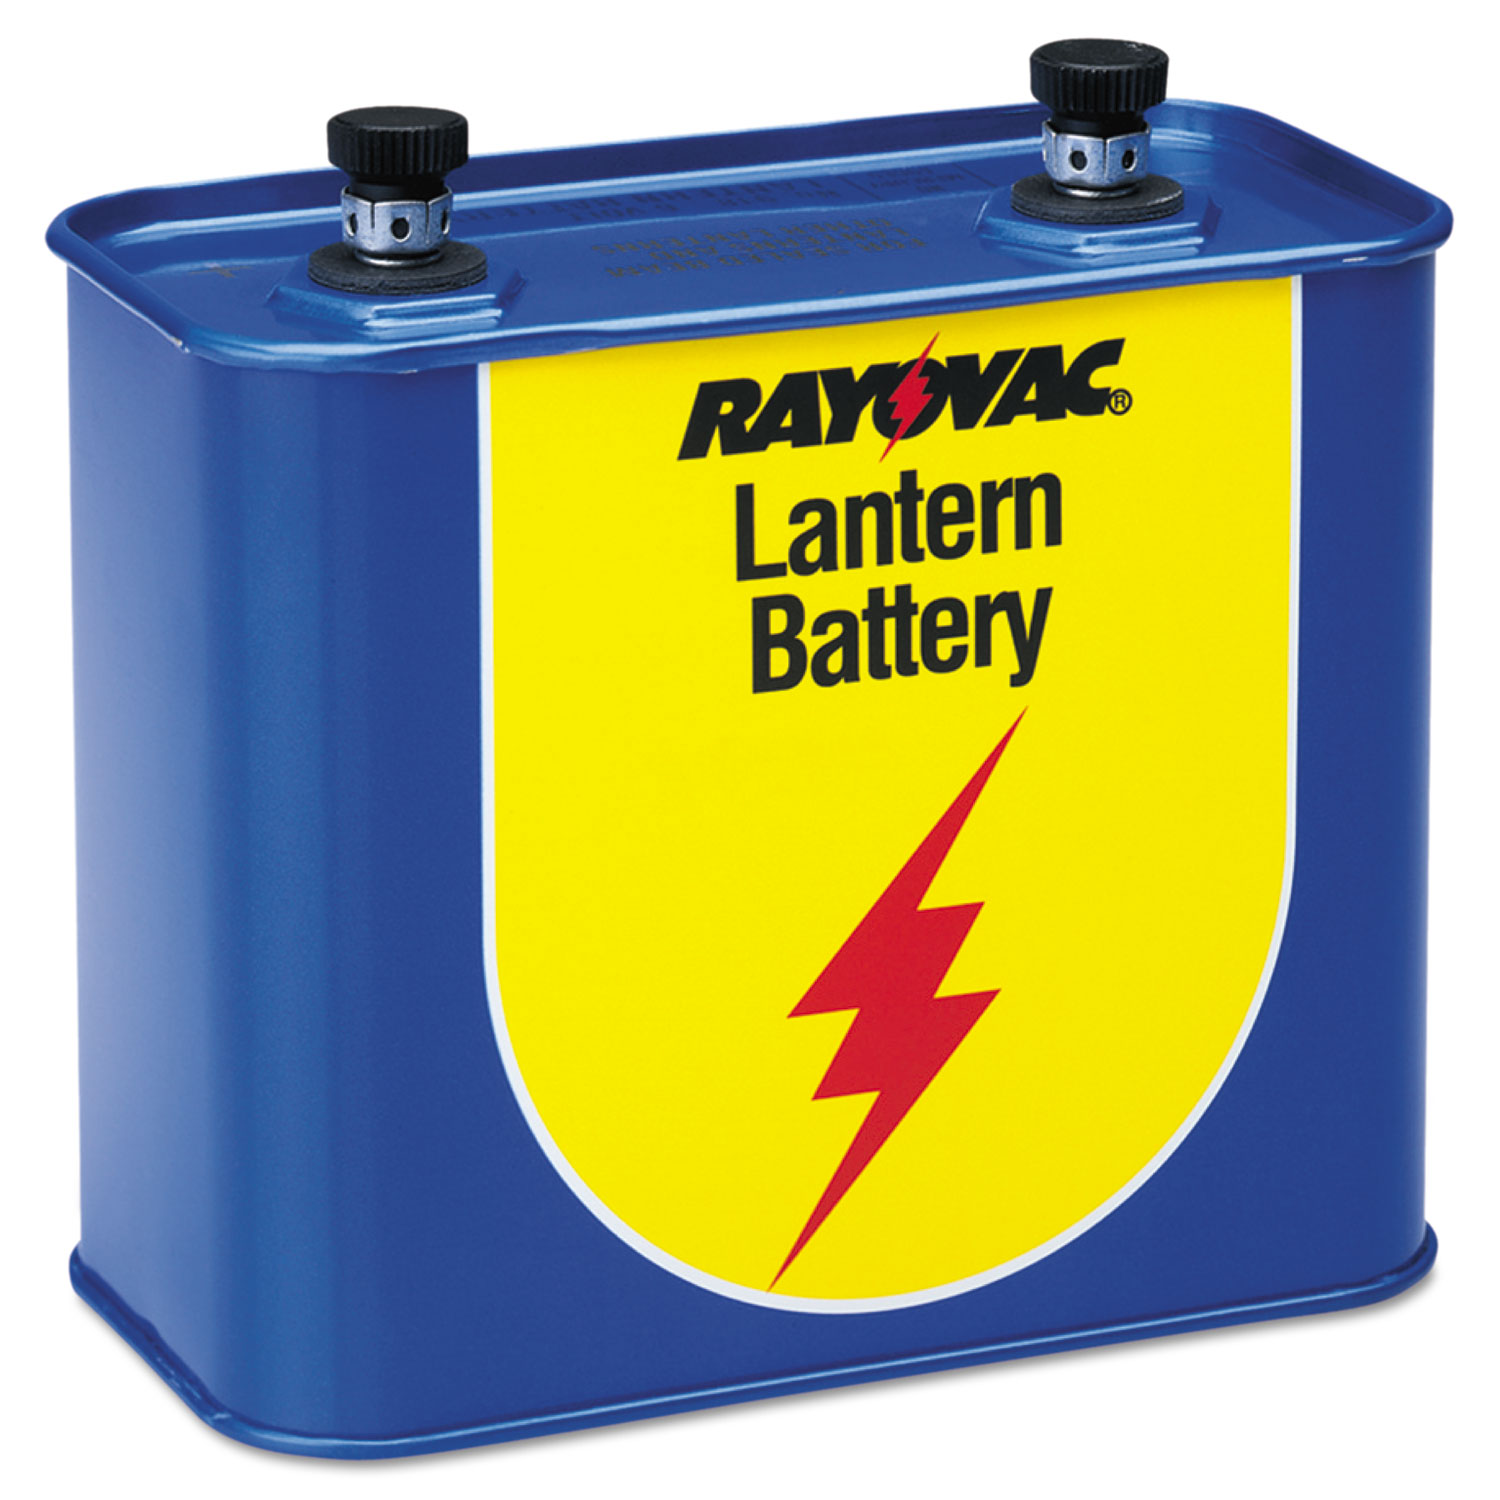 Lantern Battery, 6 Volt